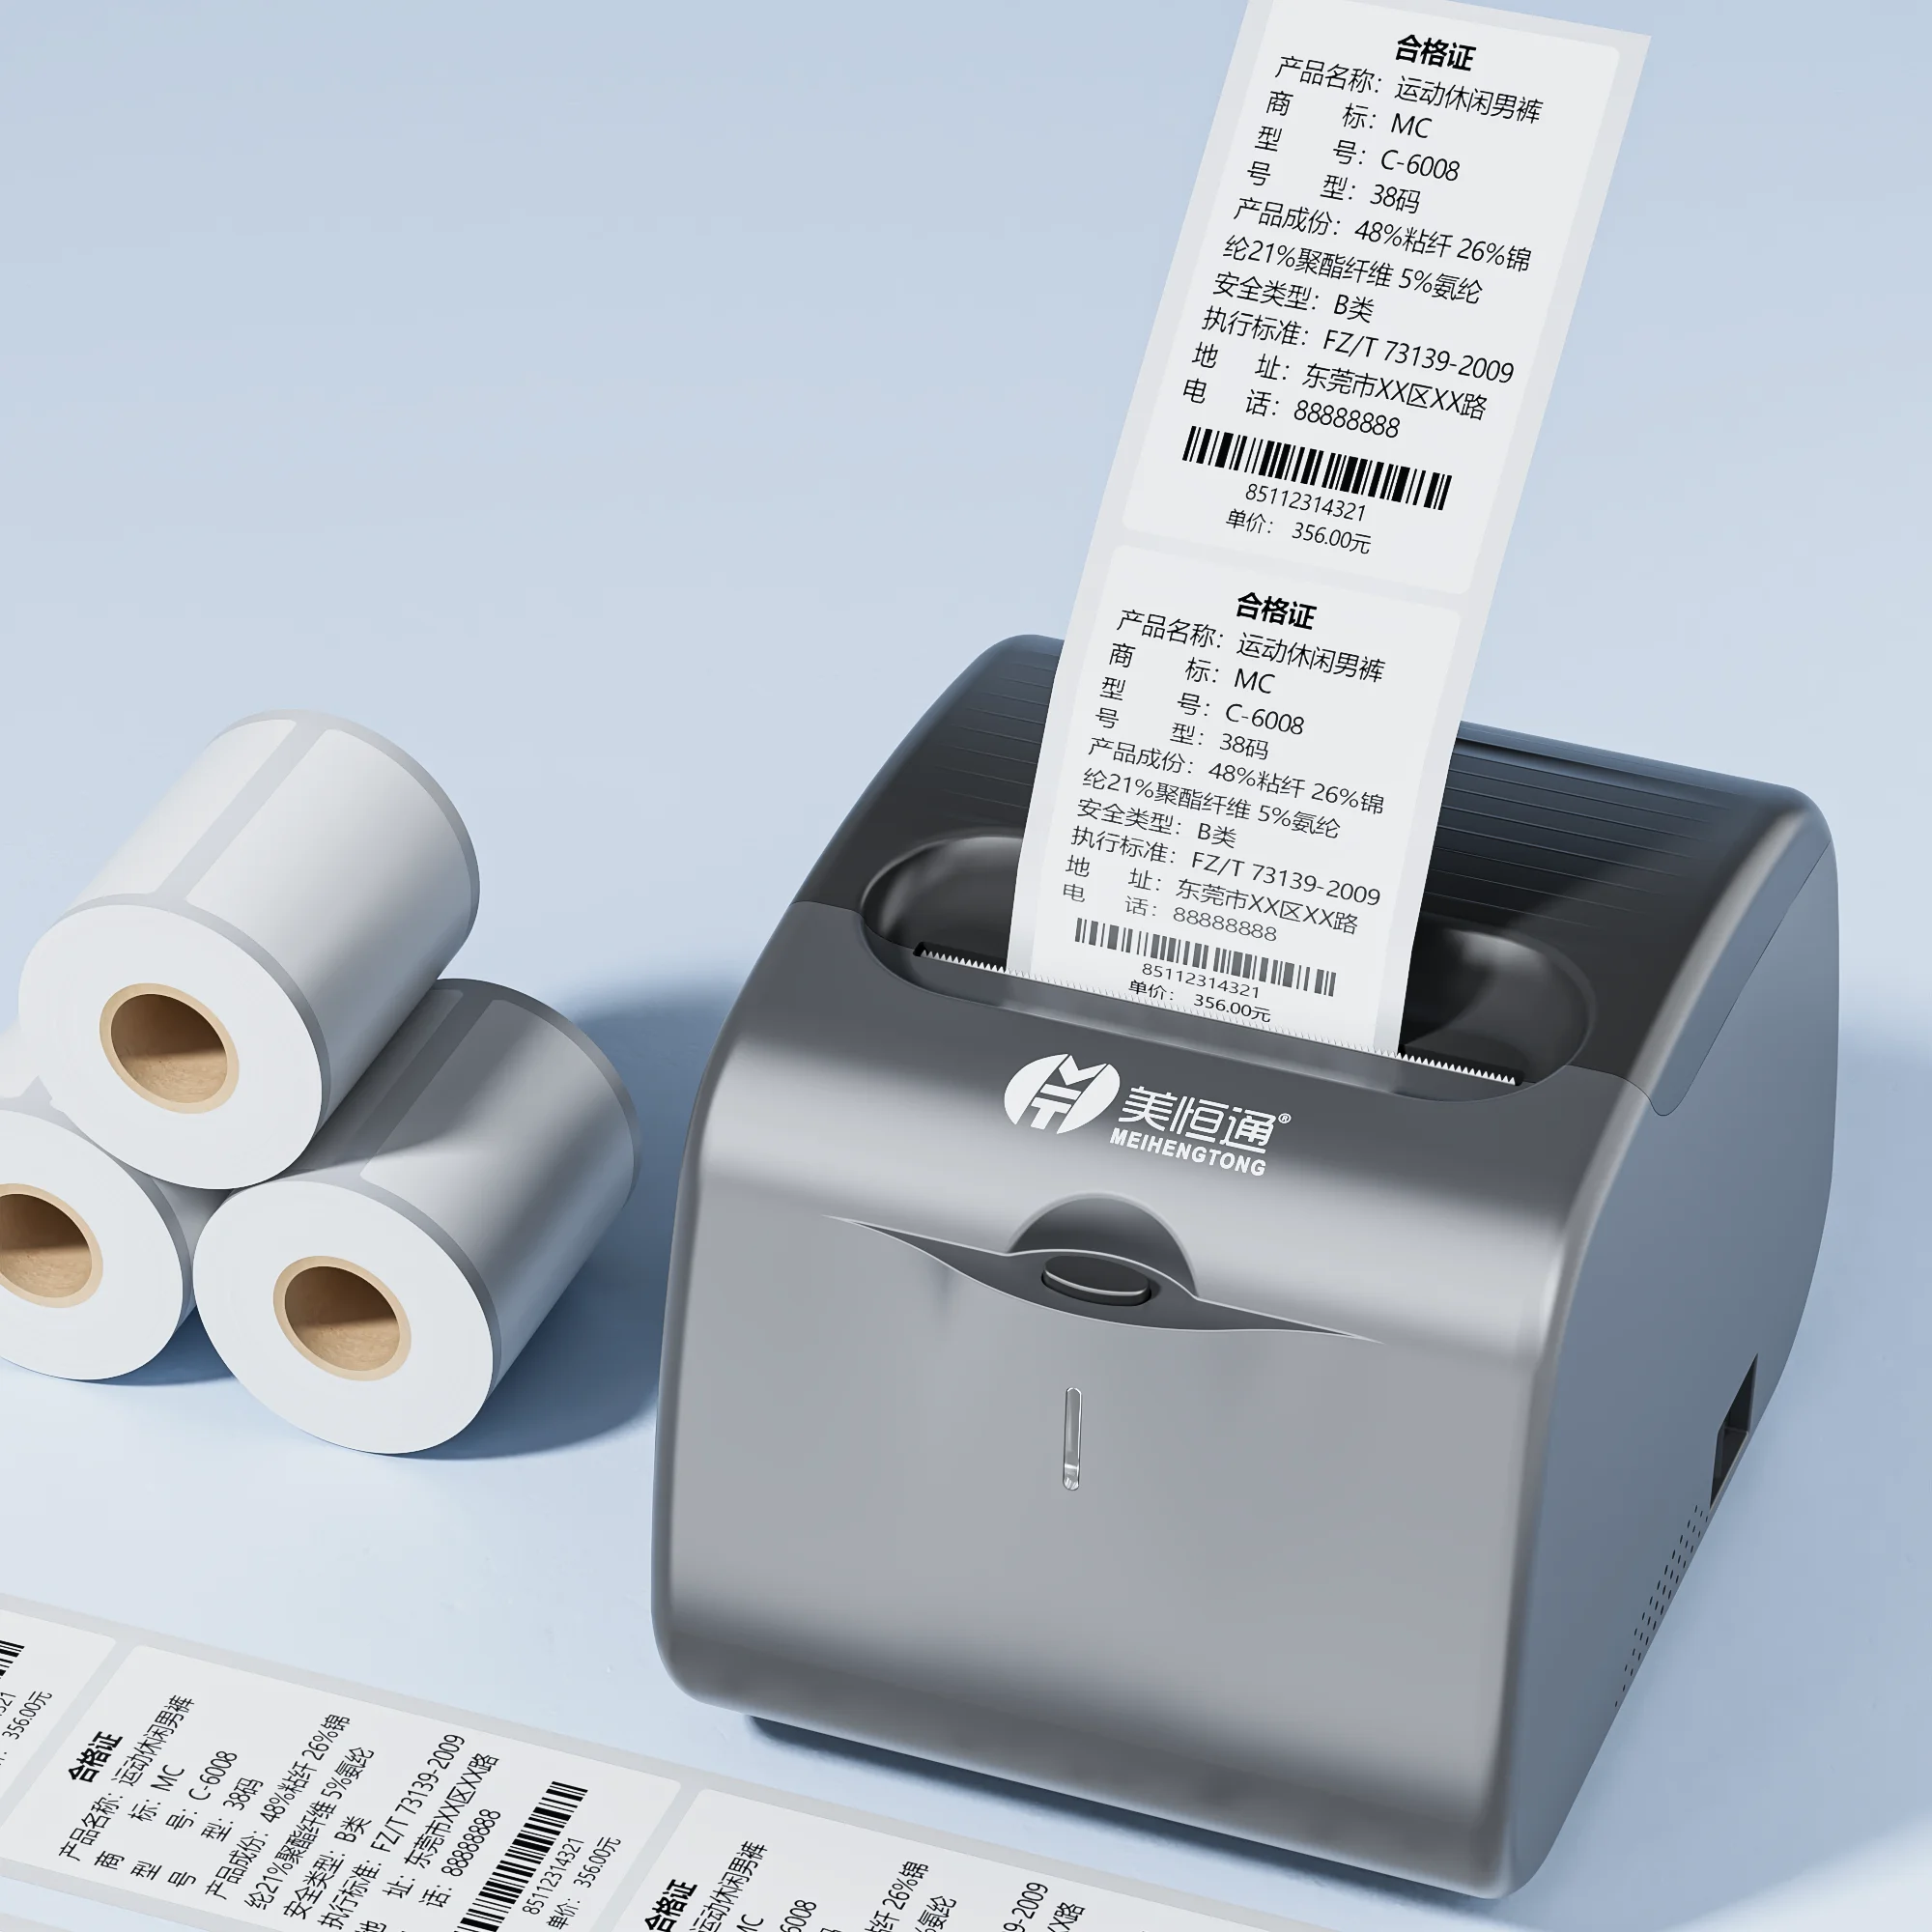 

MHT-L80G Fast Printing Waybill Label Printer 80mm Thermal Barcode Label Printer Thermal Bluetooth Mini Label Sticker Printer